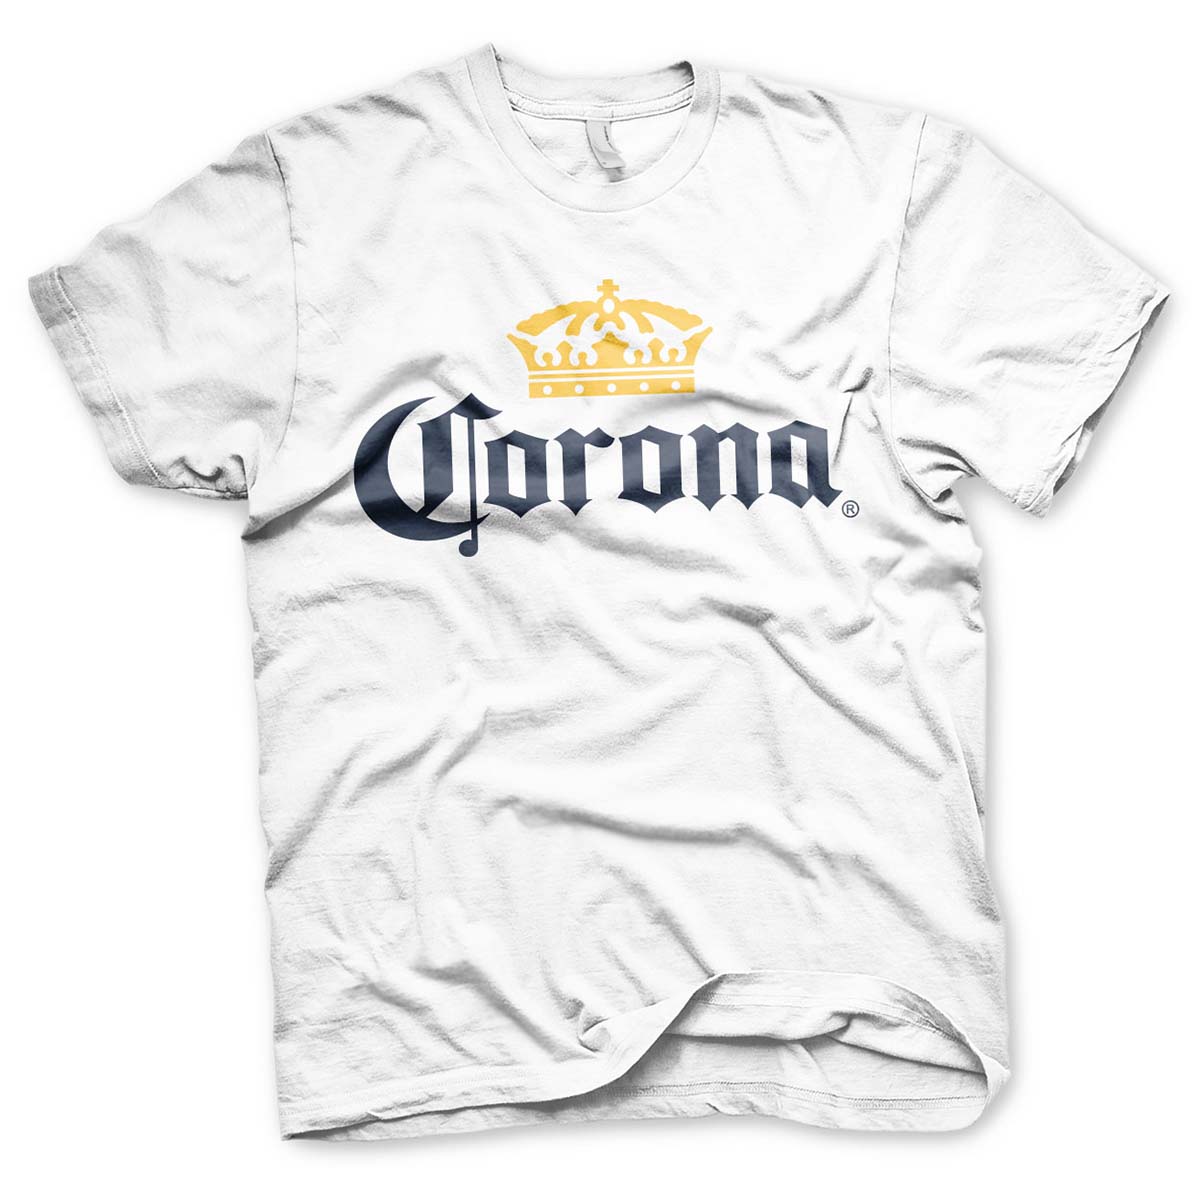 T-shirt, Corona beer S